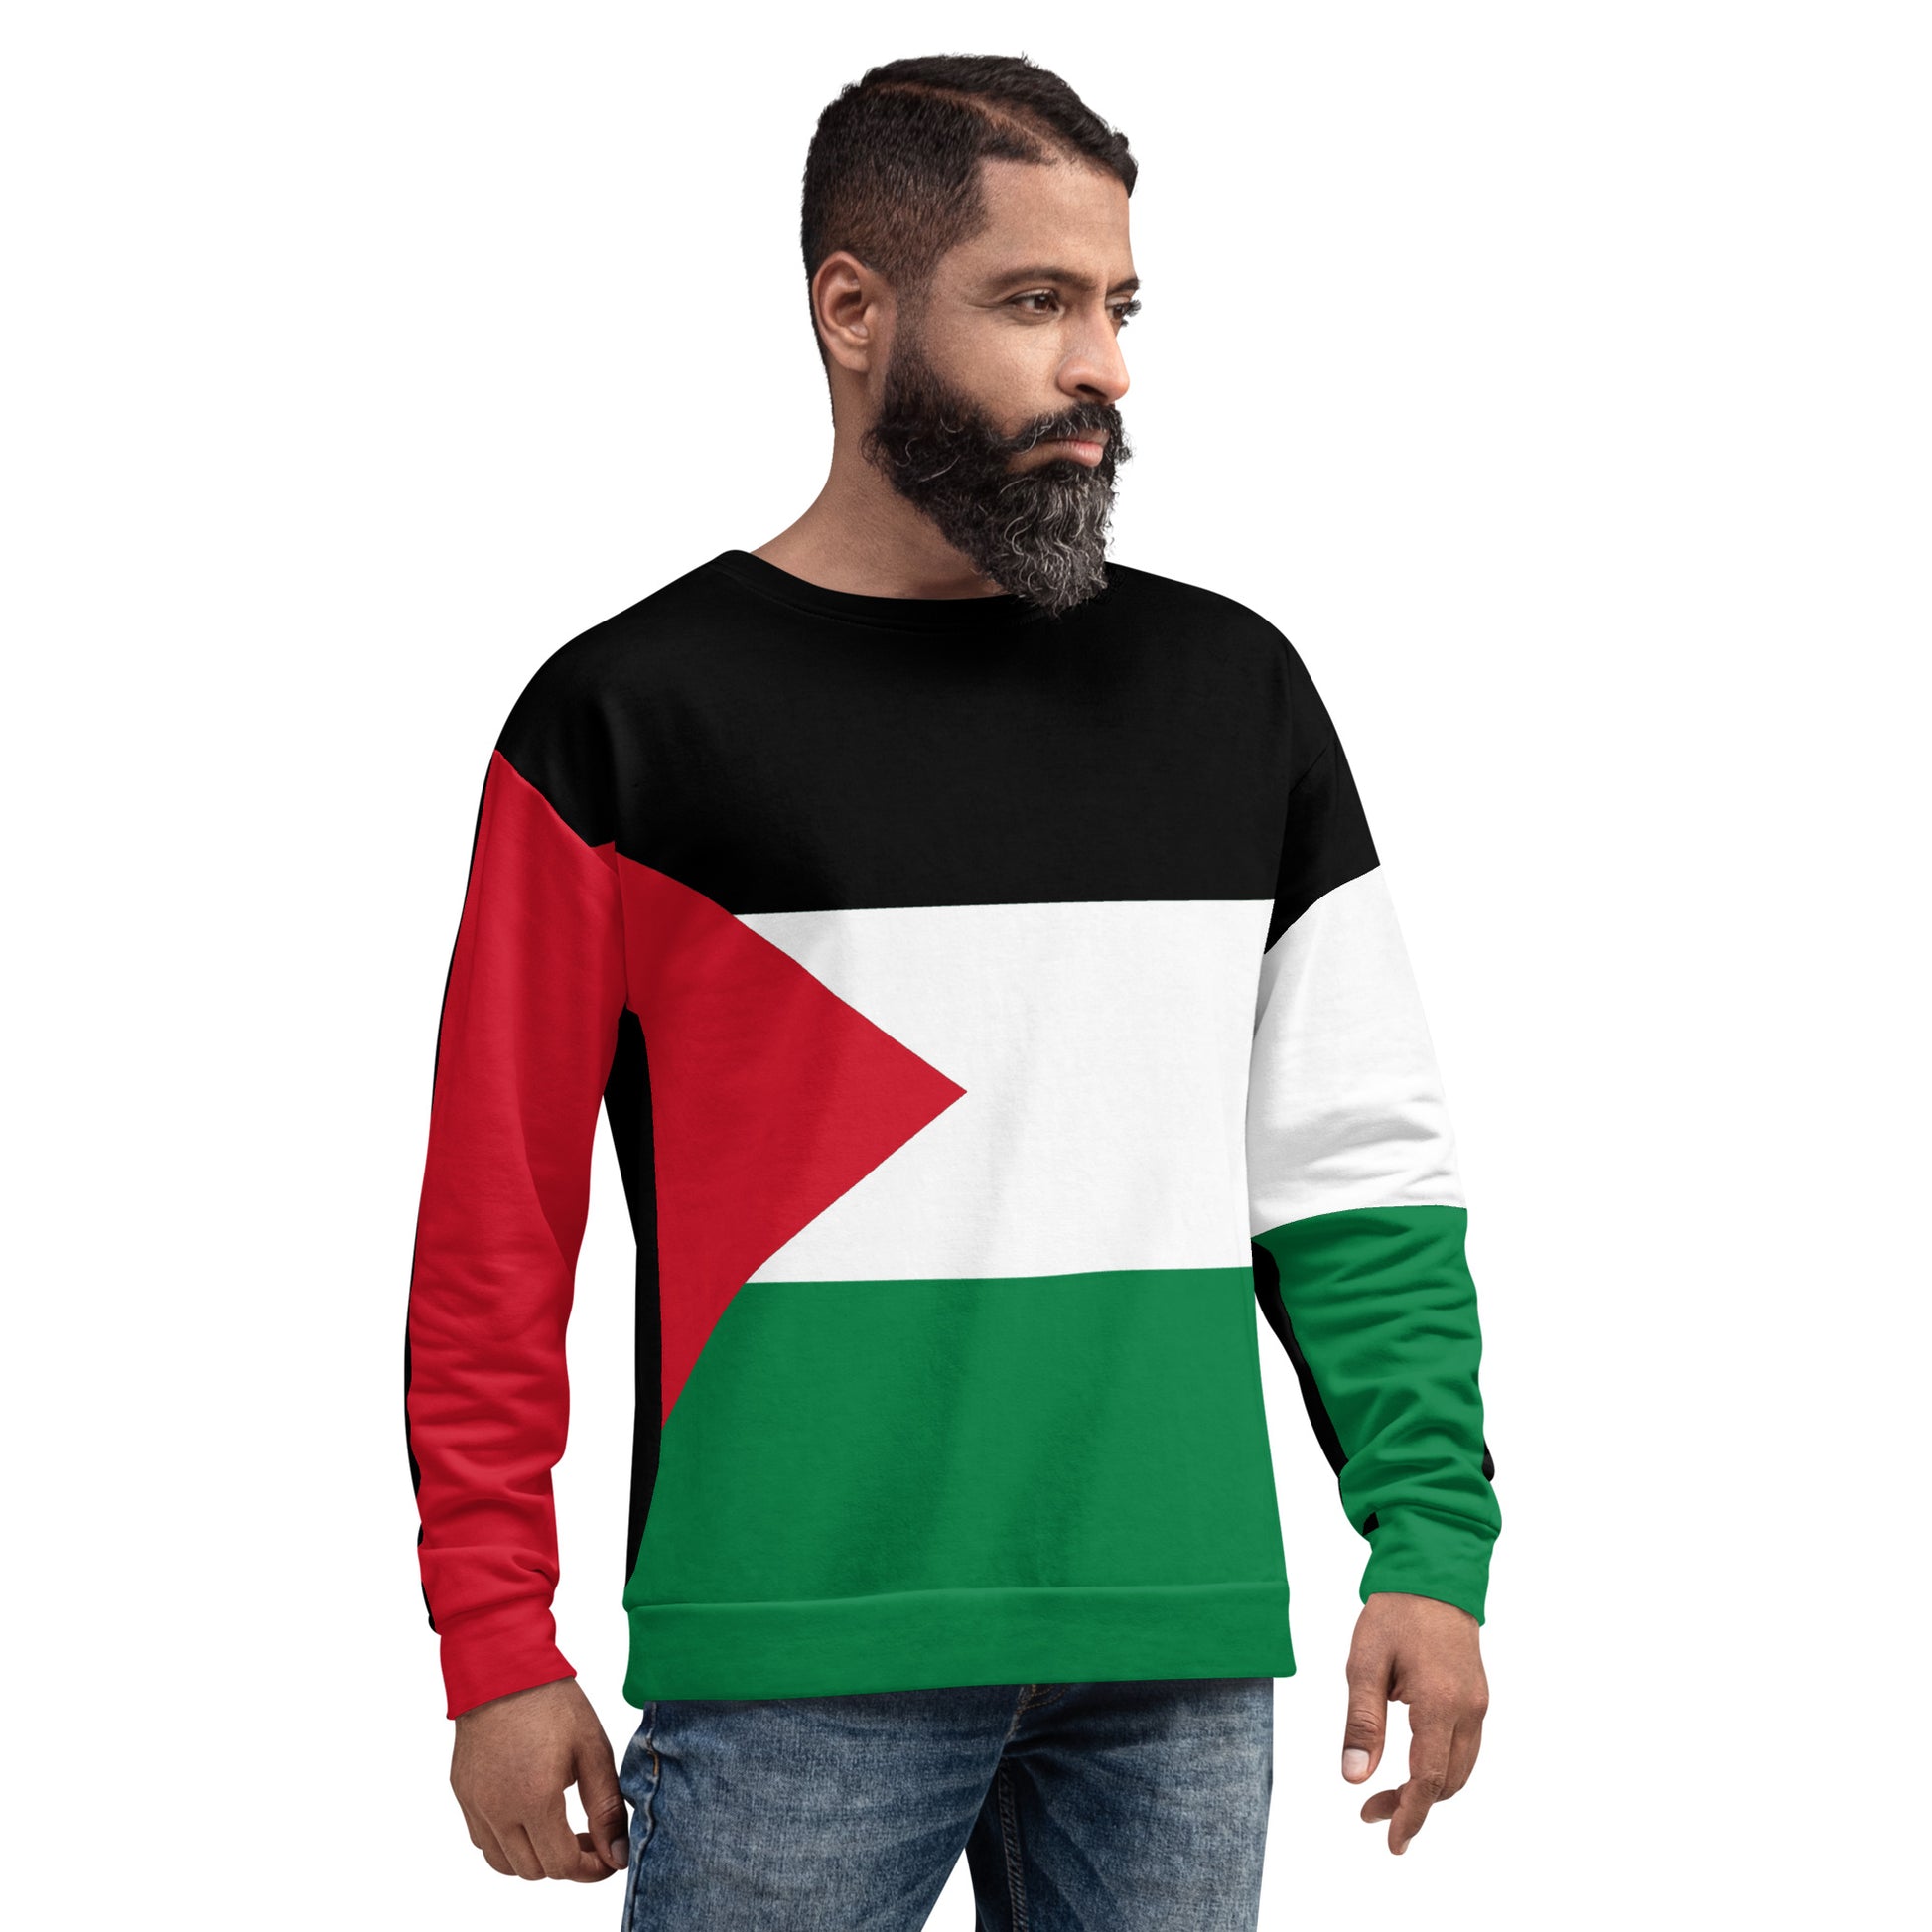 Palestine Sweatshirt Flag Clothing / Eco friendly